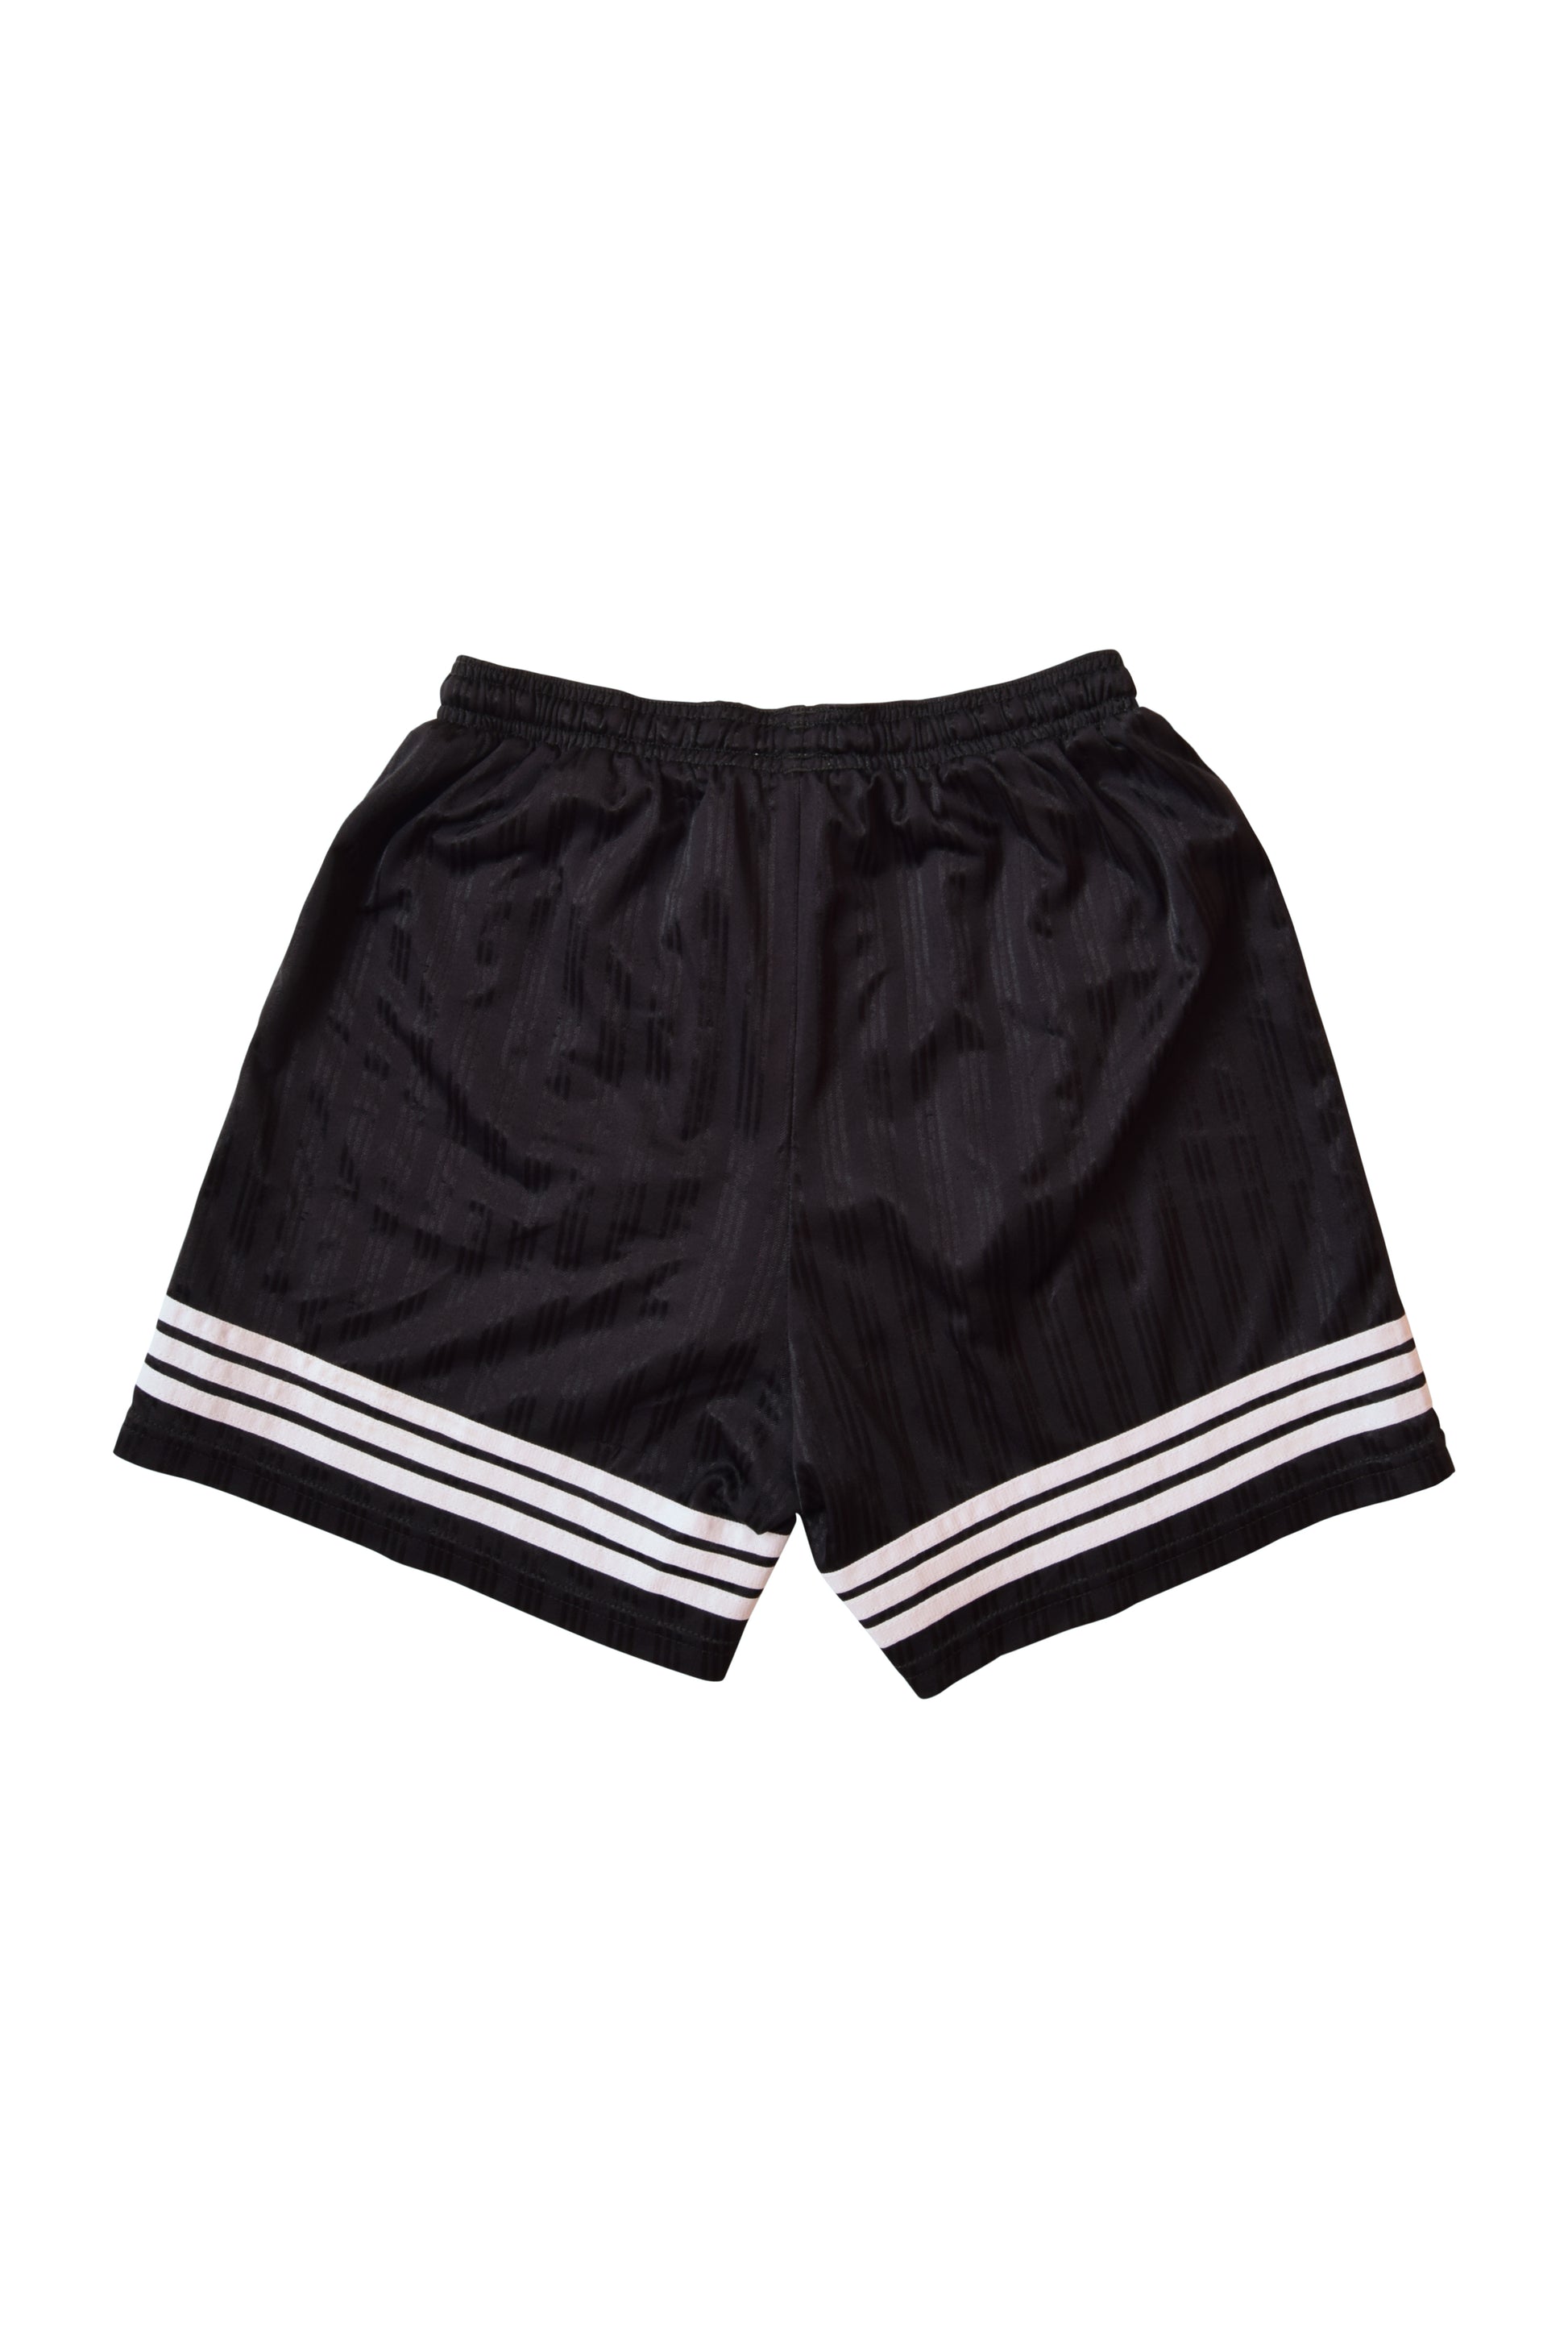 Vintage Adidas Football / Festival Shorts Black Made in England Size XL